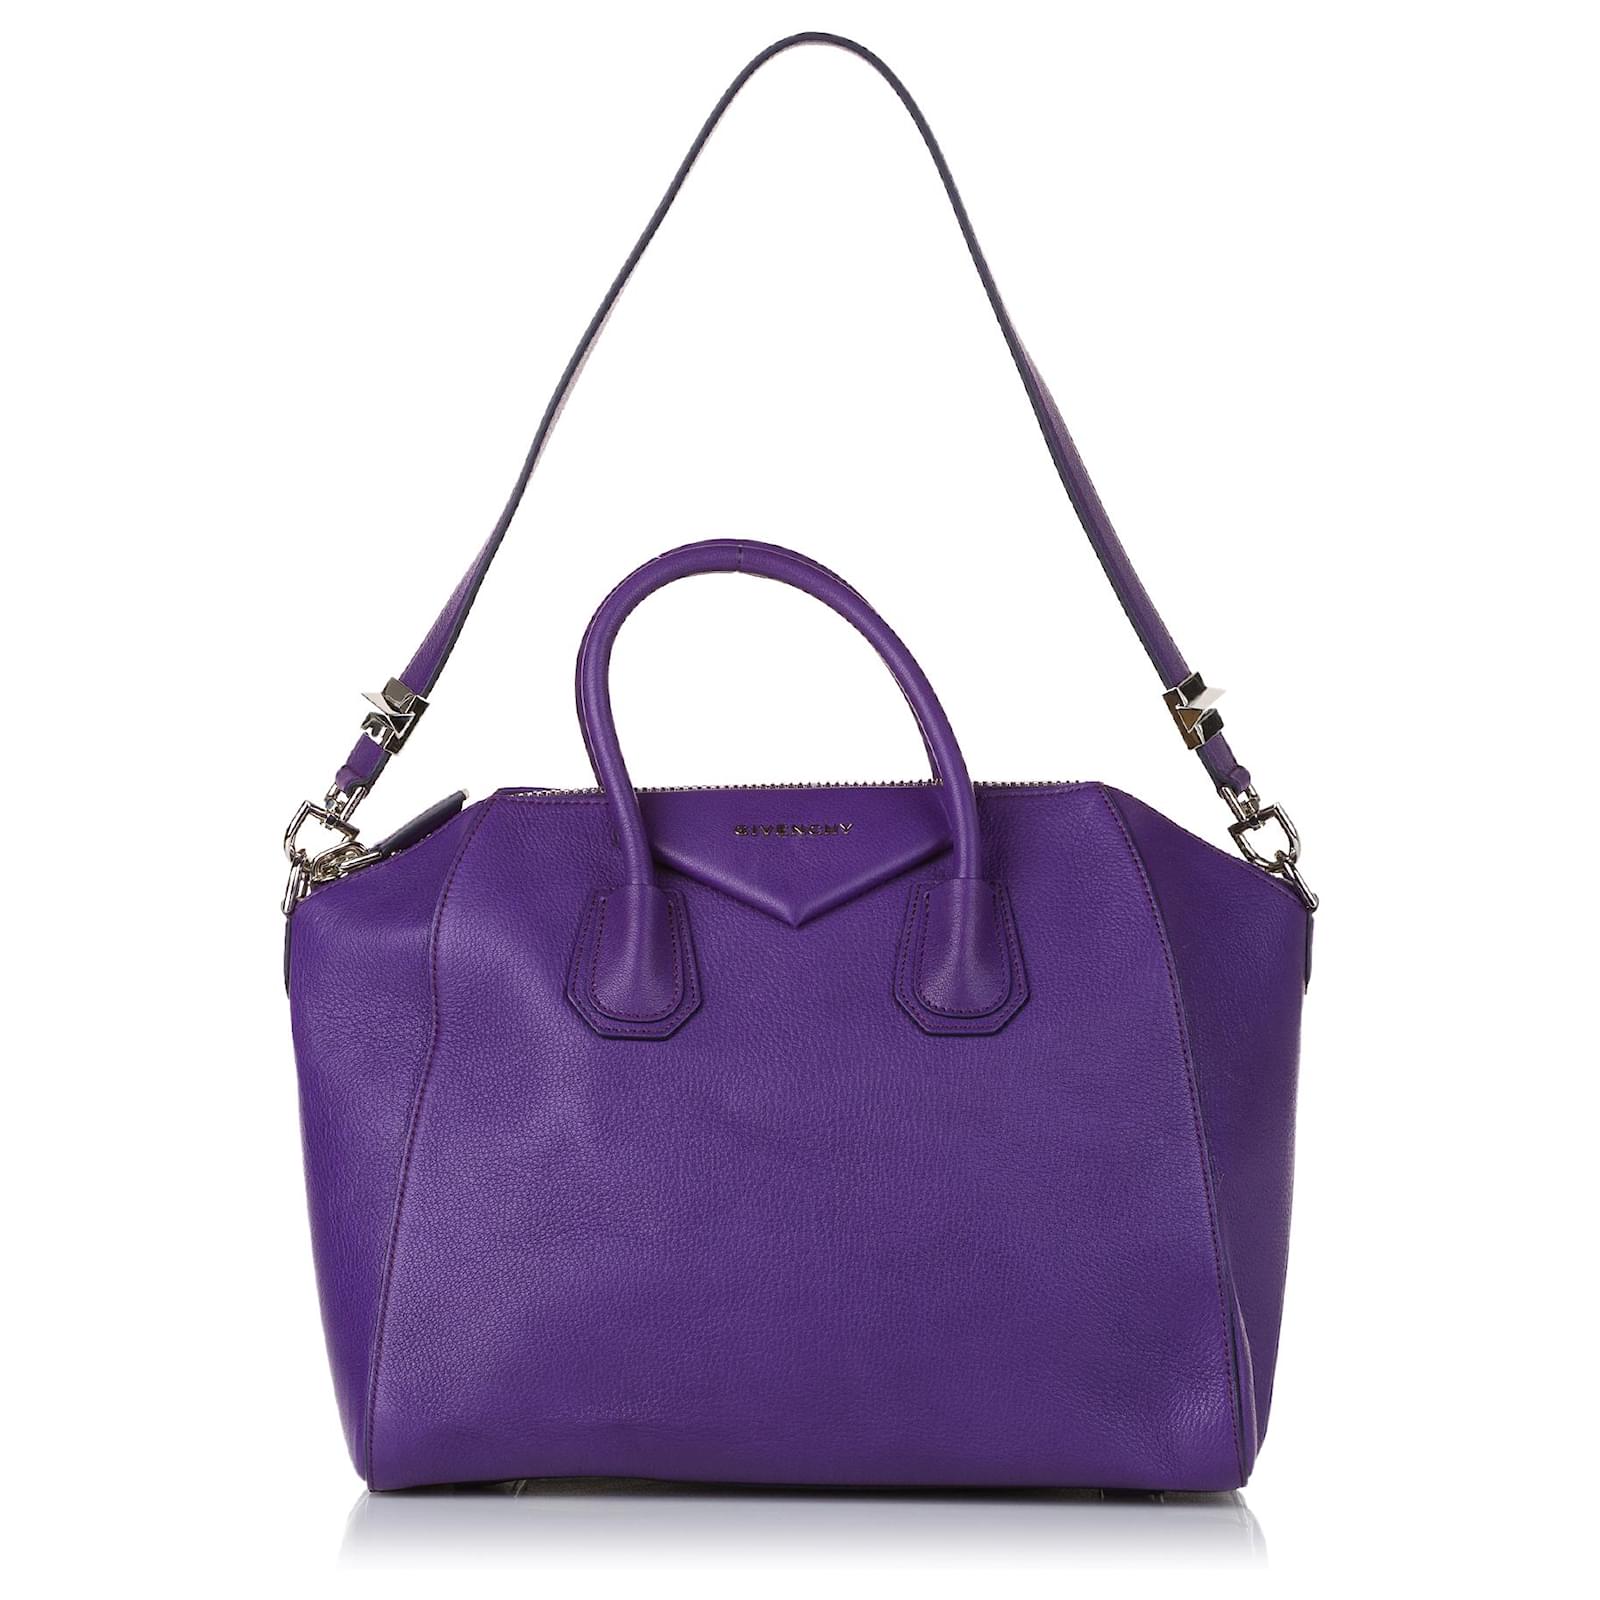 Givenchy Antigona Mini Leather Shoulder Bag in Purple